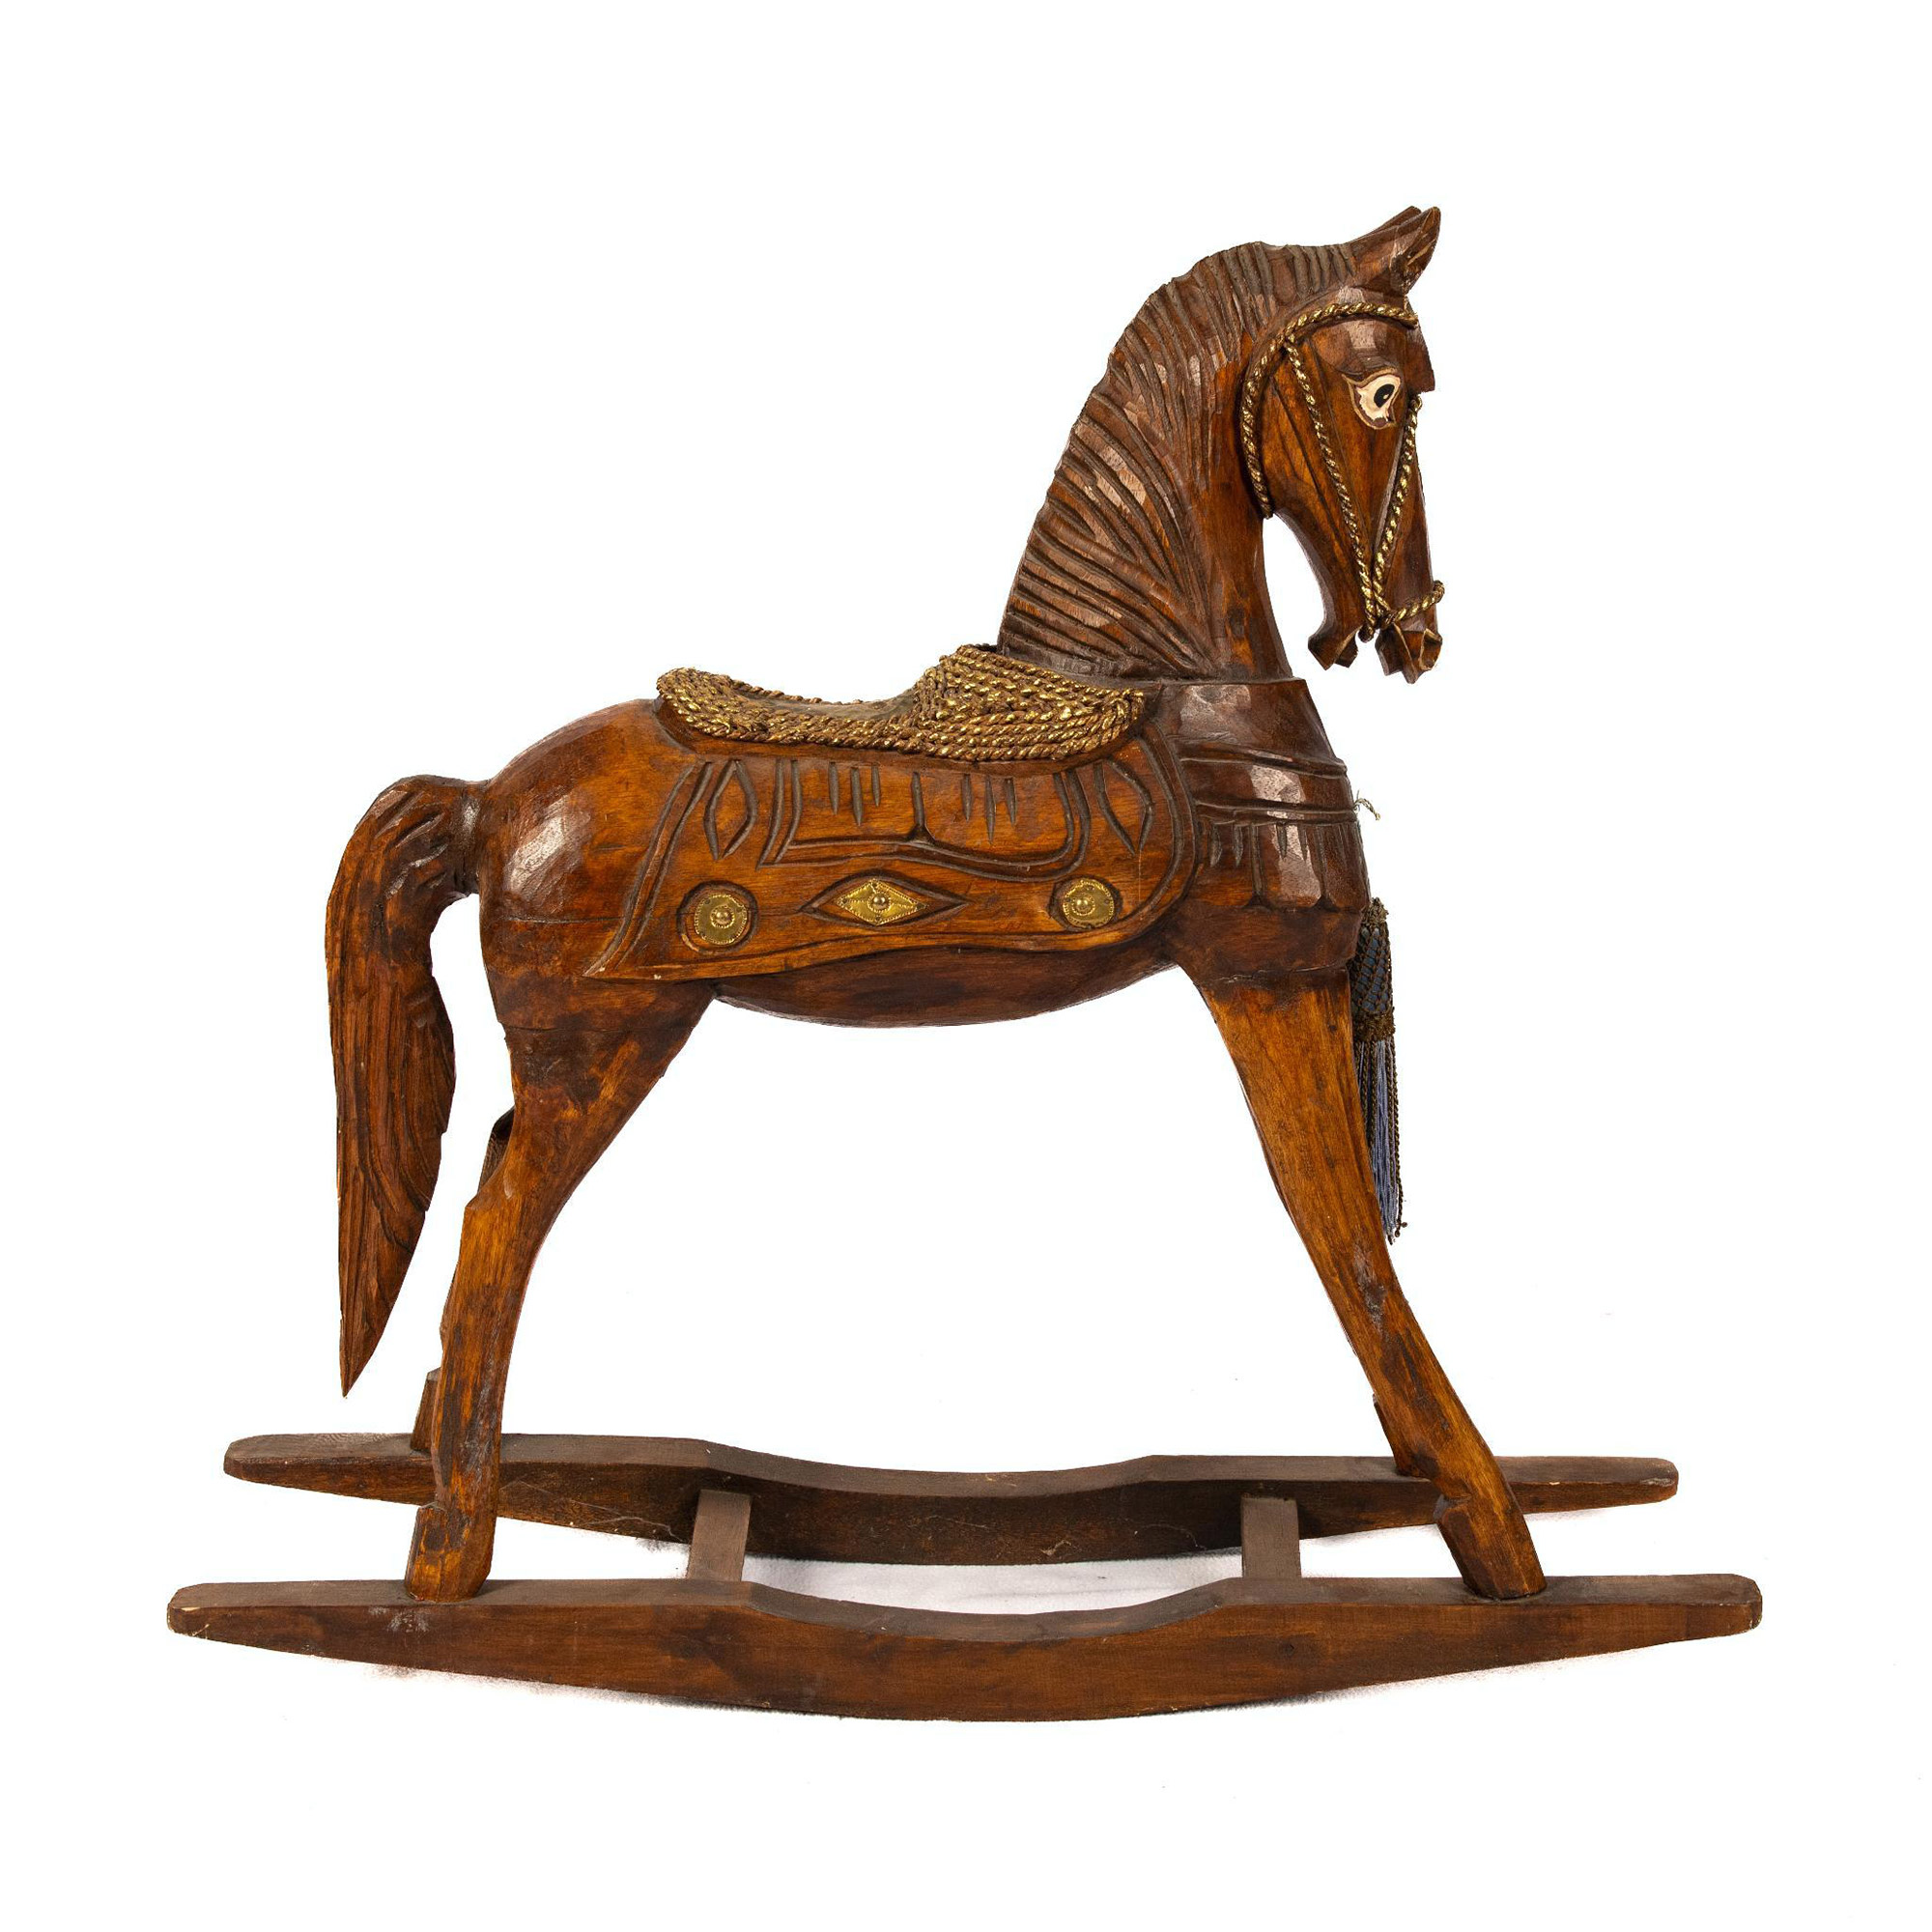 Decorative Wood-Stained Rocking Horse - Image 3 of 6